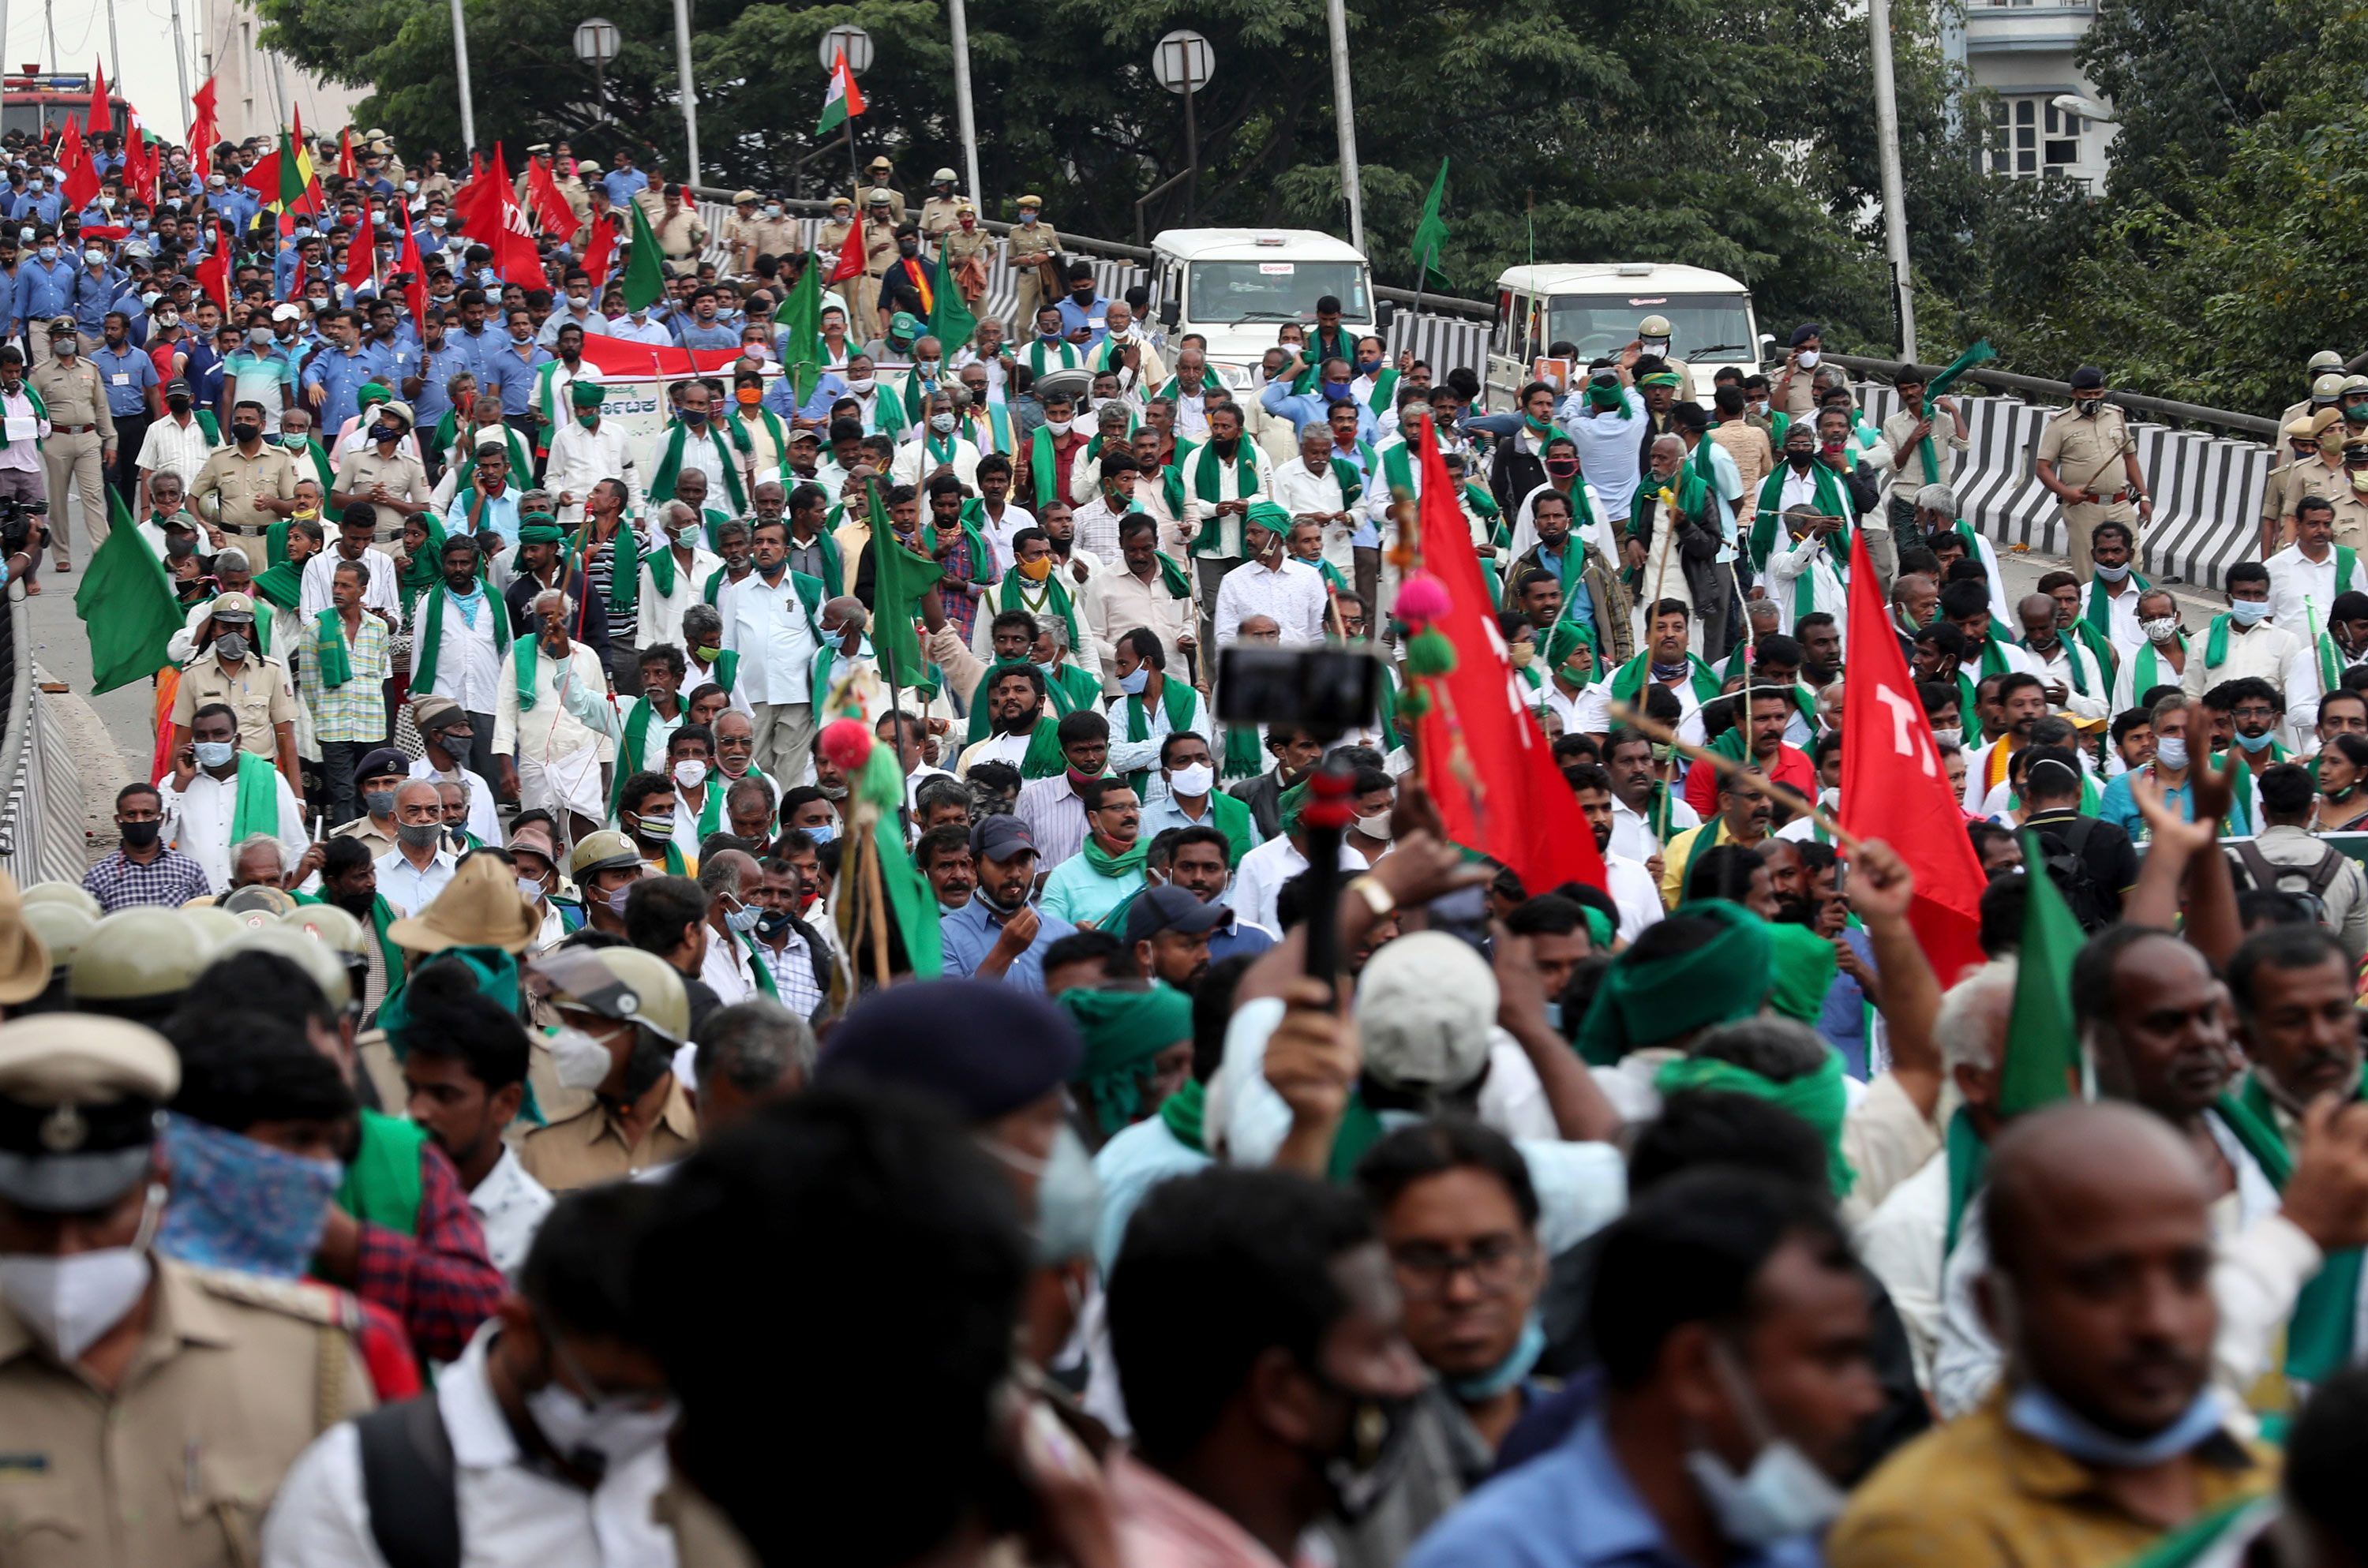 Farmers Protest in Bengaluru against farm laws